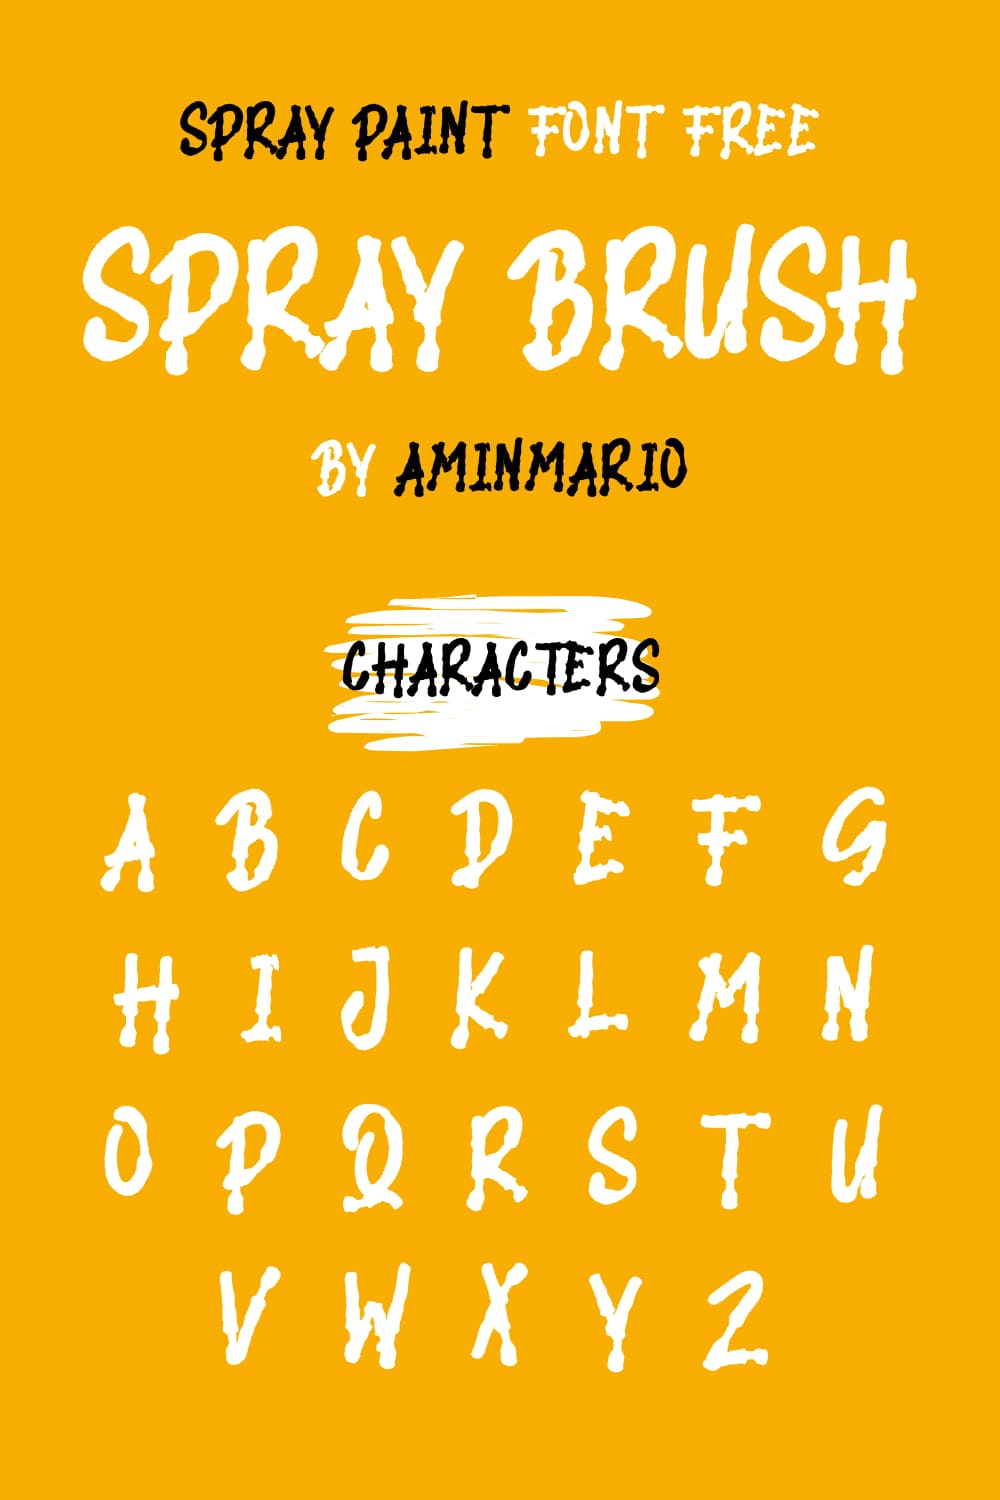 Brush Spray Paint Font Free.